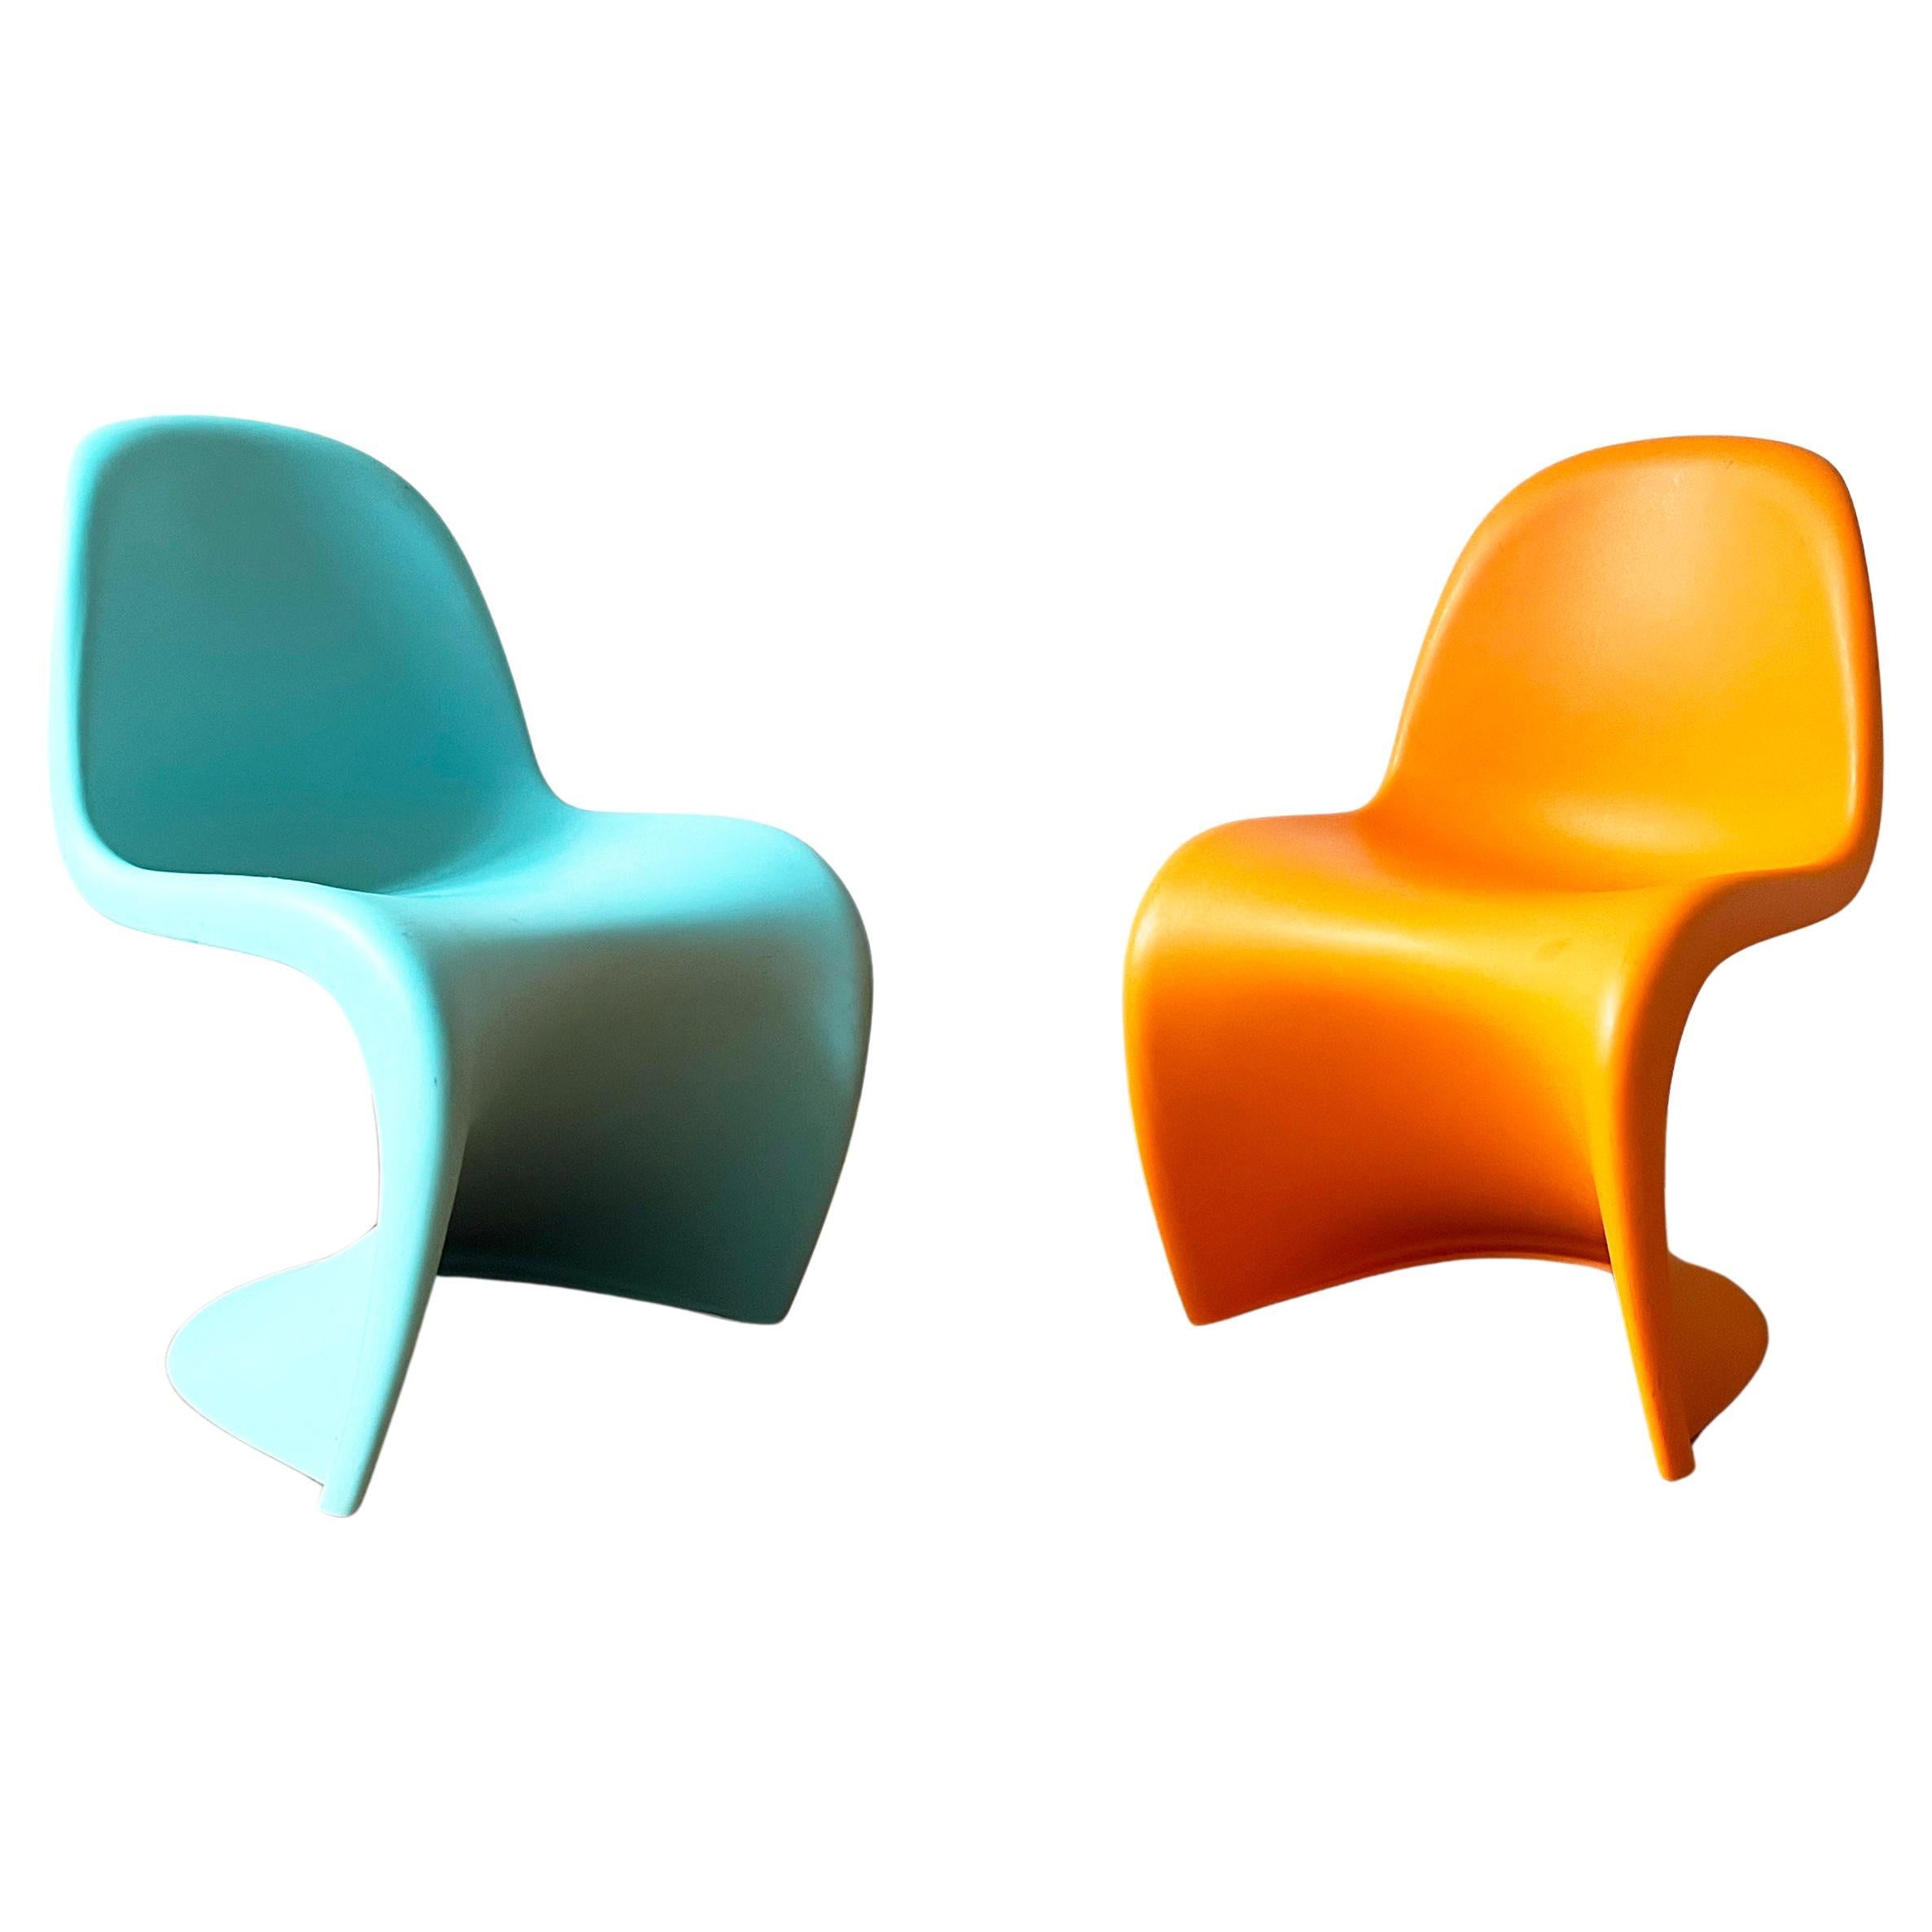 MCM Panton Junior PAIR of Kids Chairs by Verner Panton Vitra, Turquoise + Orange For Sale